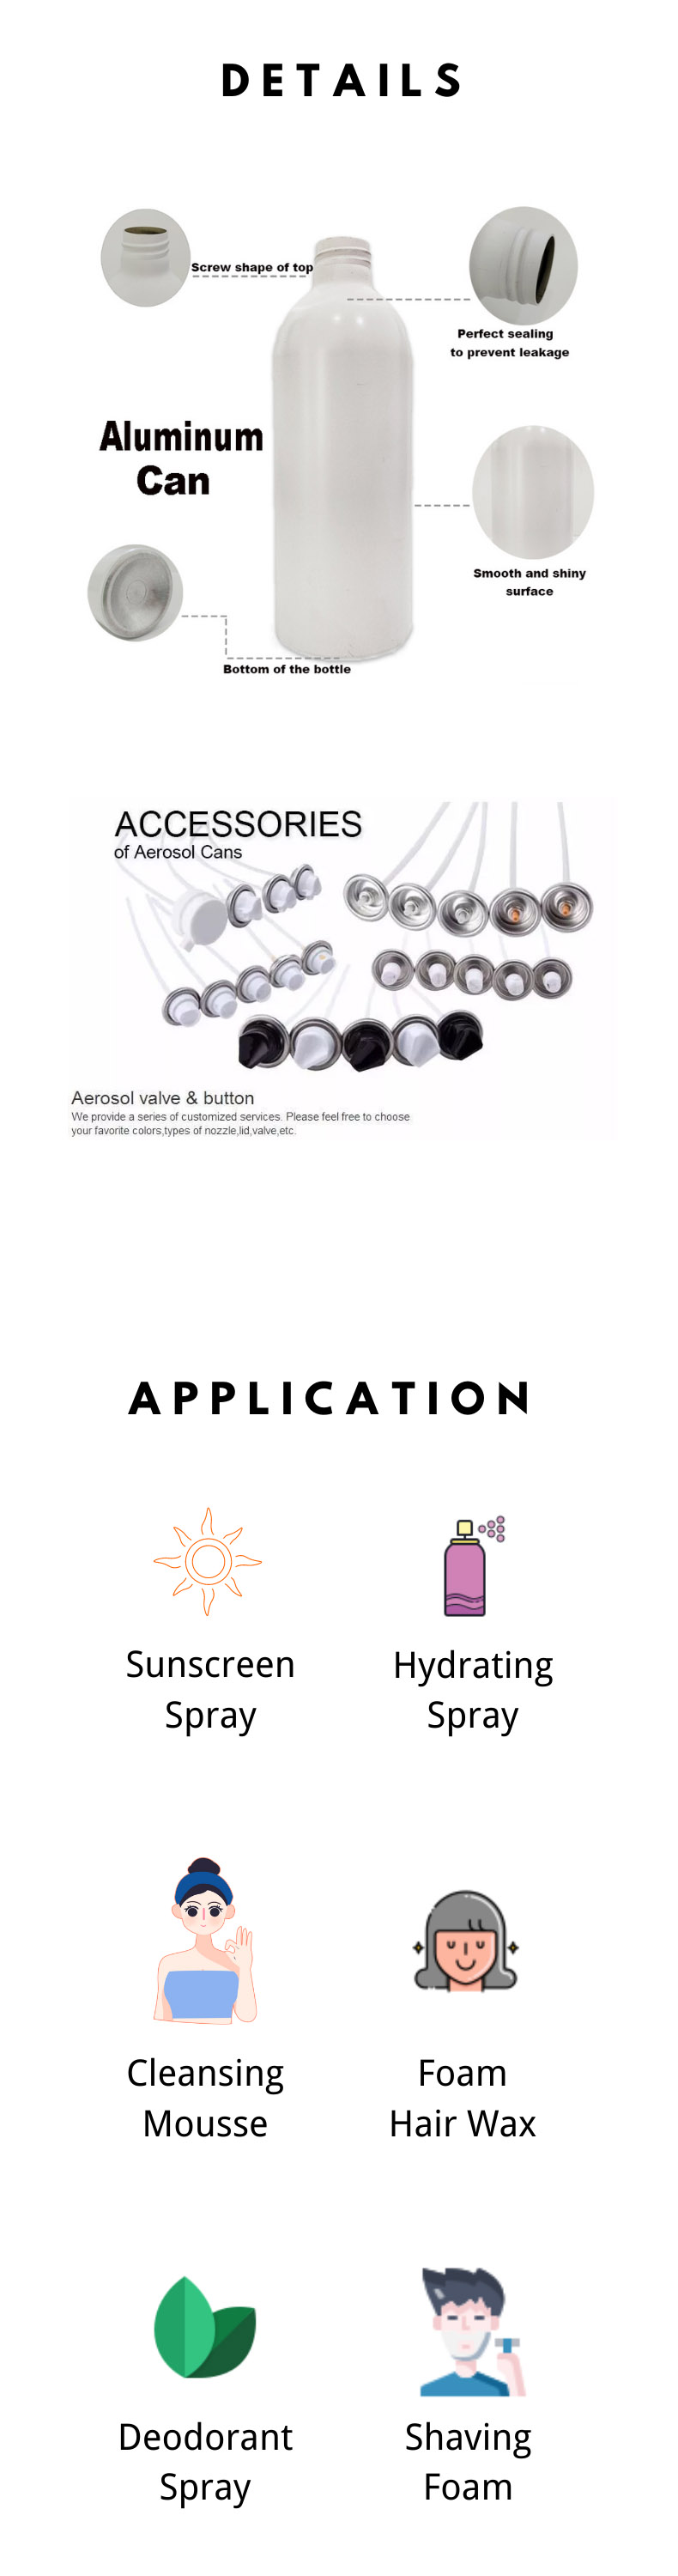 application for aluminum aerosol cans 